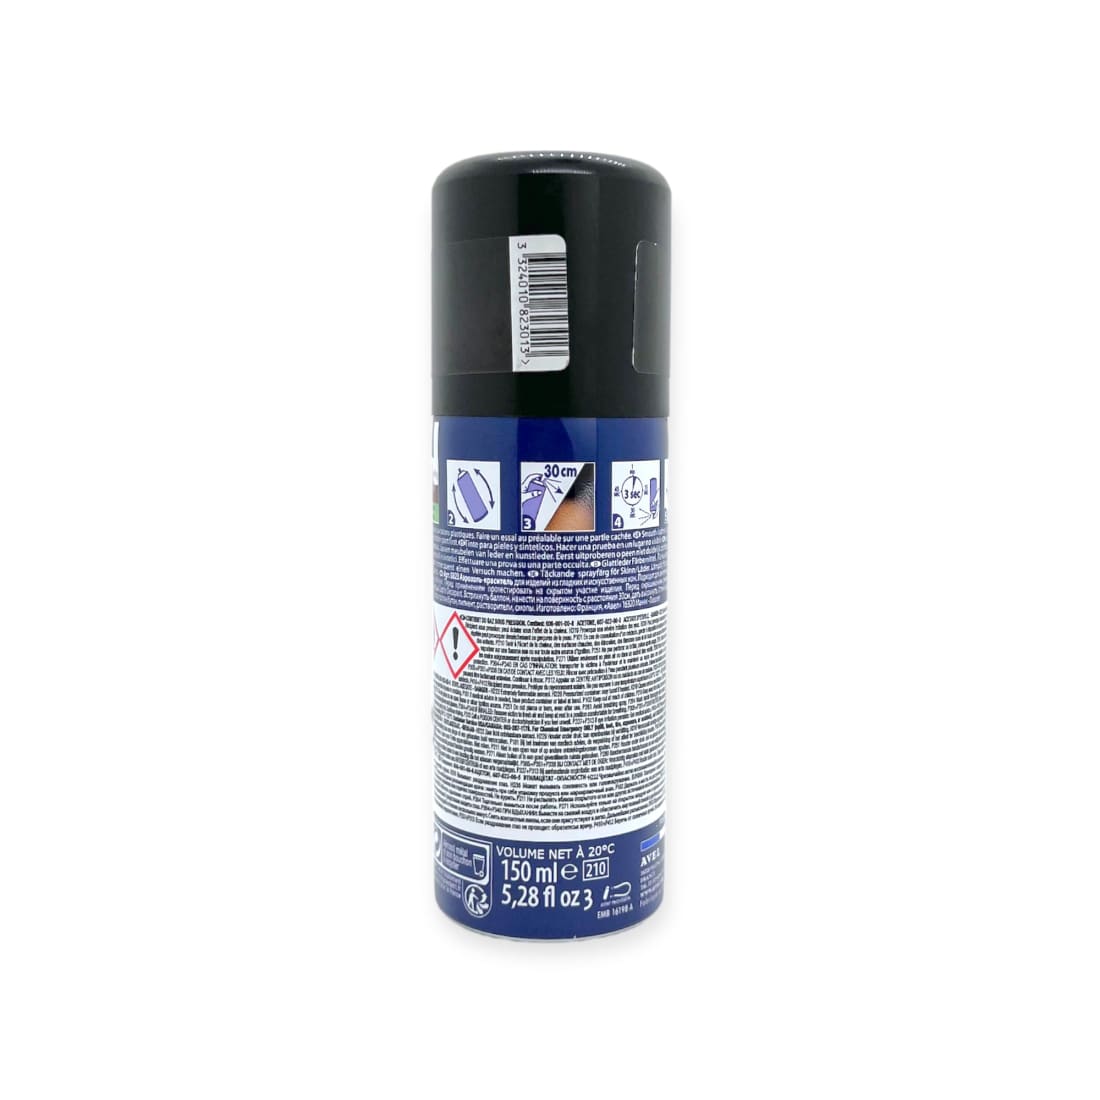 Spray Tenax Teinture Ivoire - Saphir - 150 ml - Accessoires